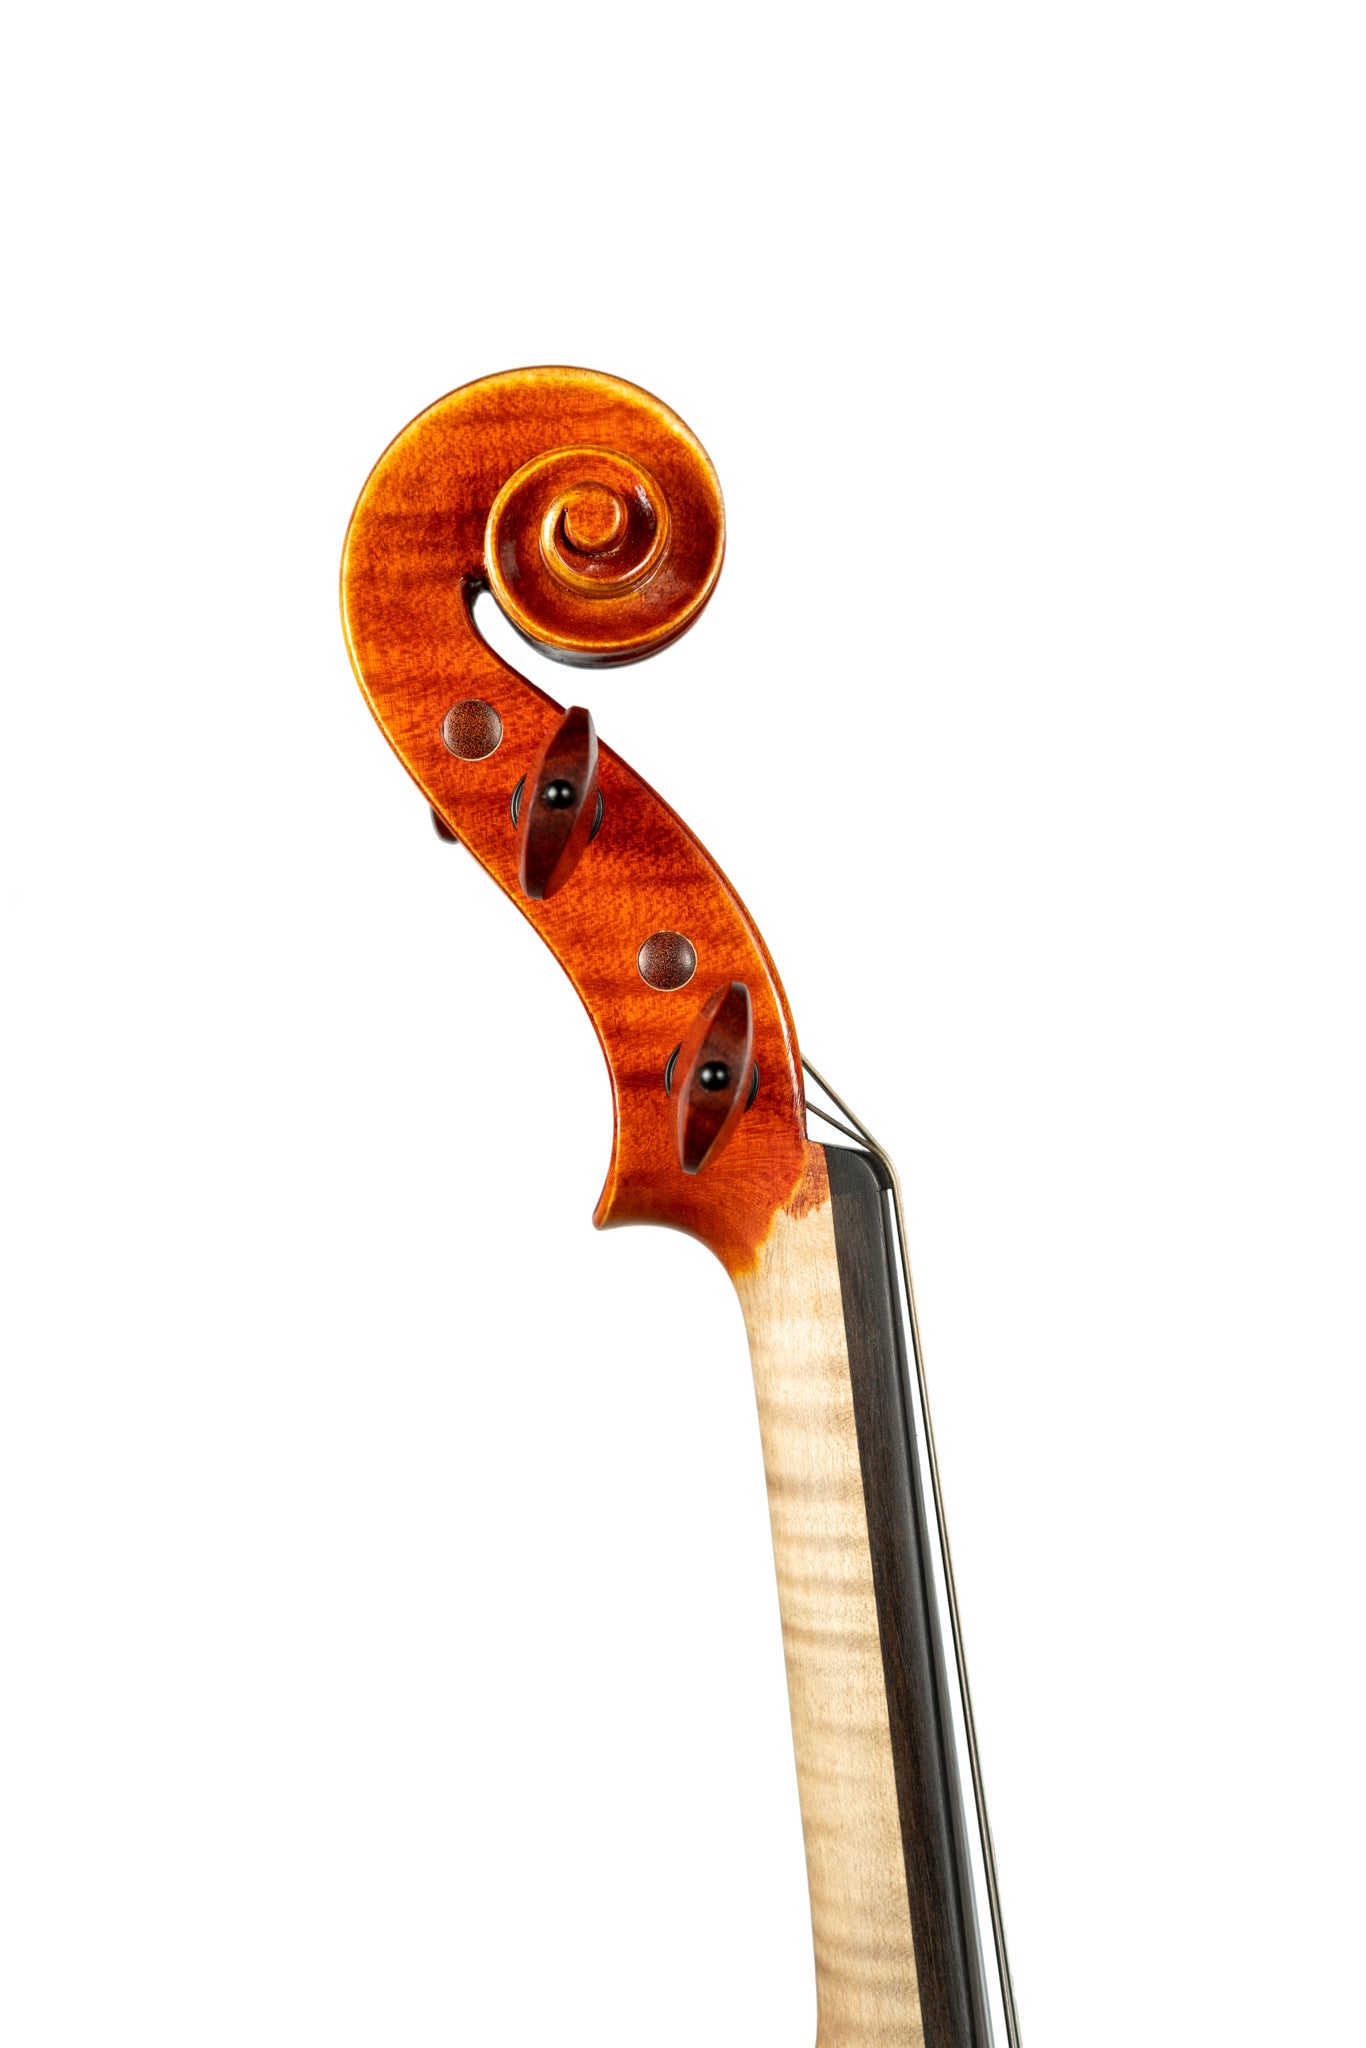 BL-800 Violin